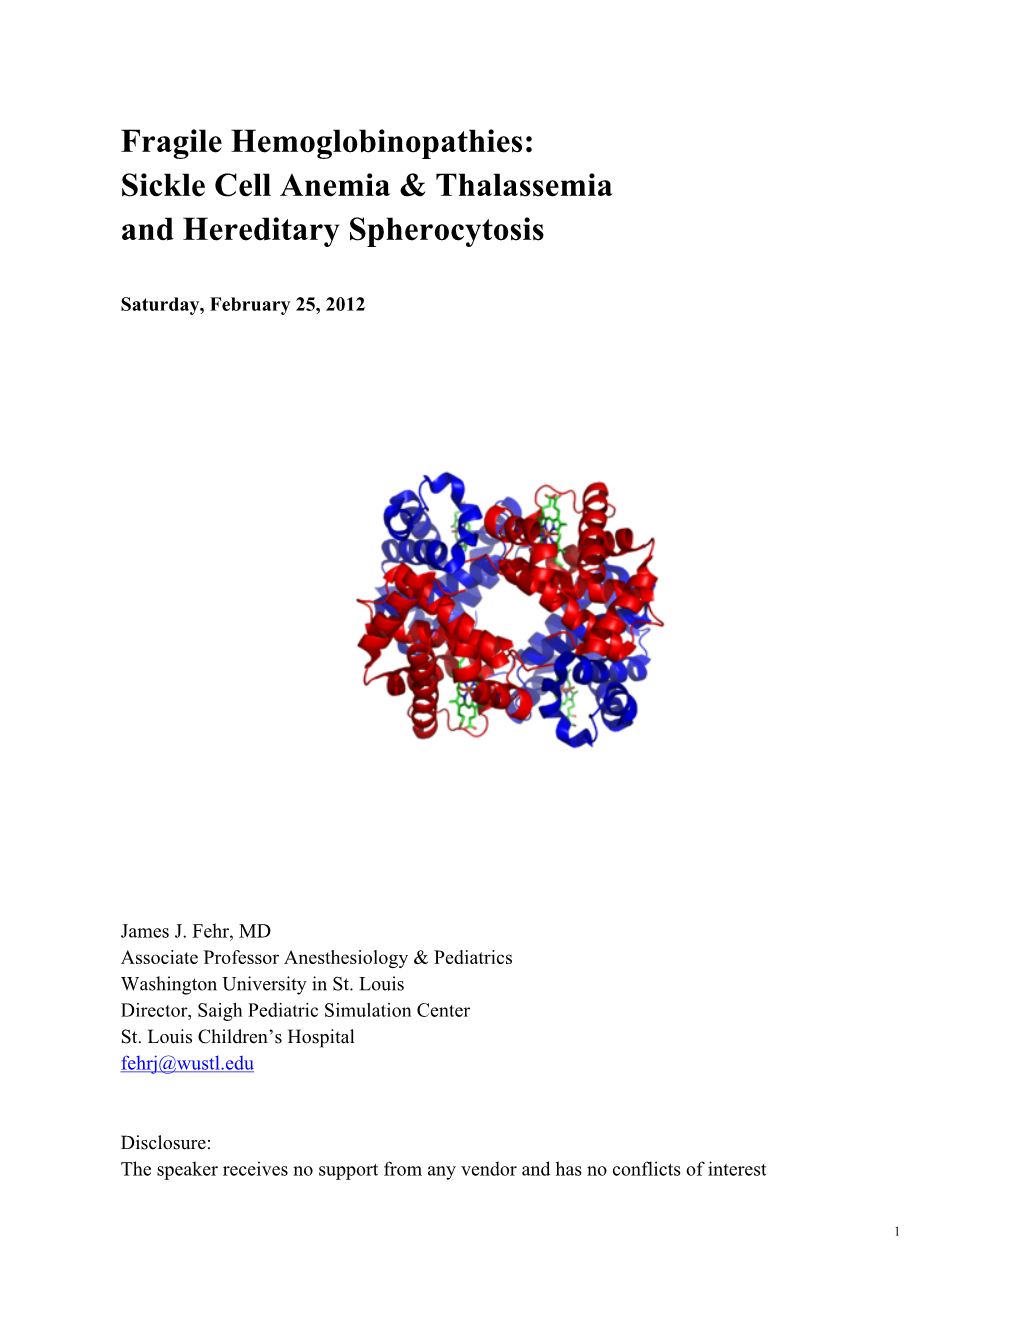 Fragile Hemoglobinopathies: Sickle Cell Anemia & Thalassemia and Hereditary Spherocytosis